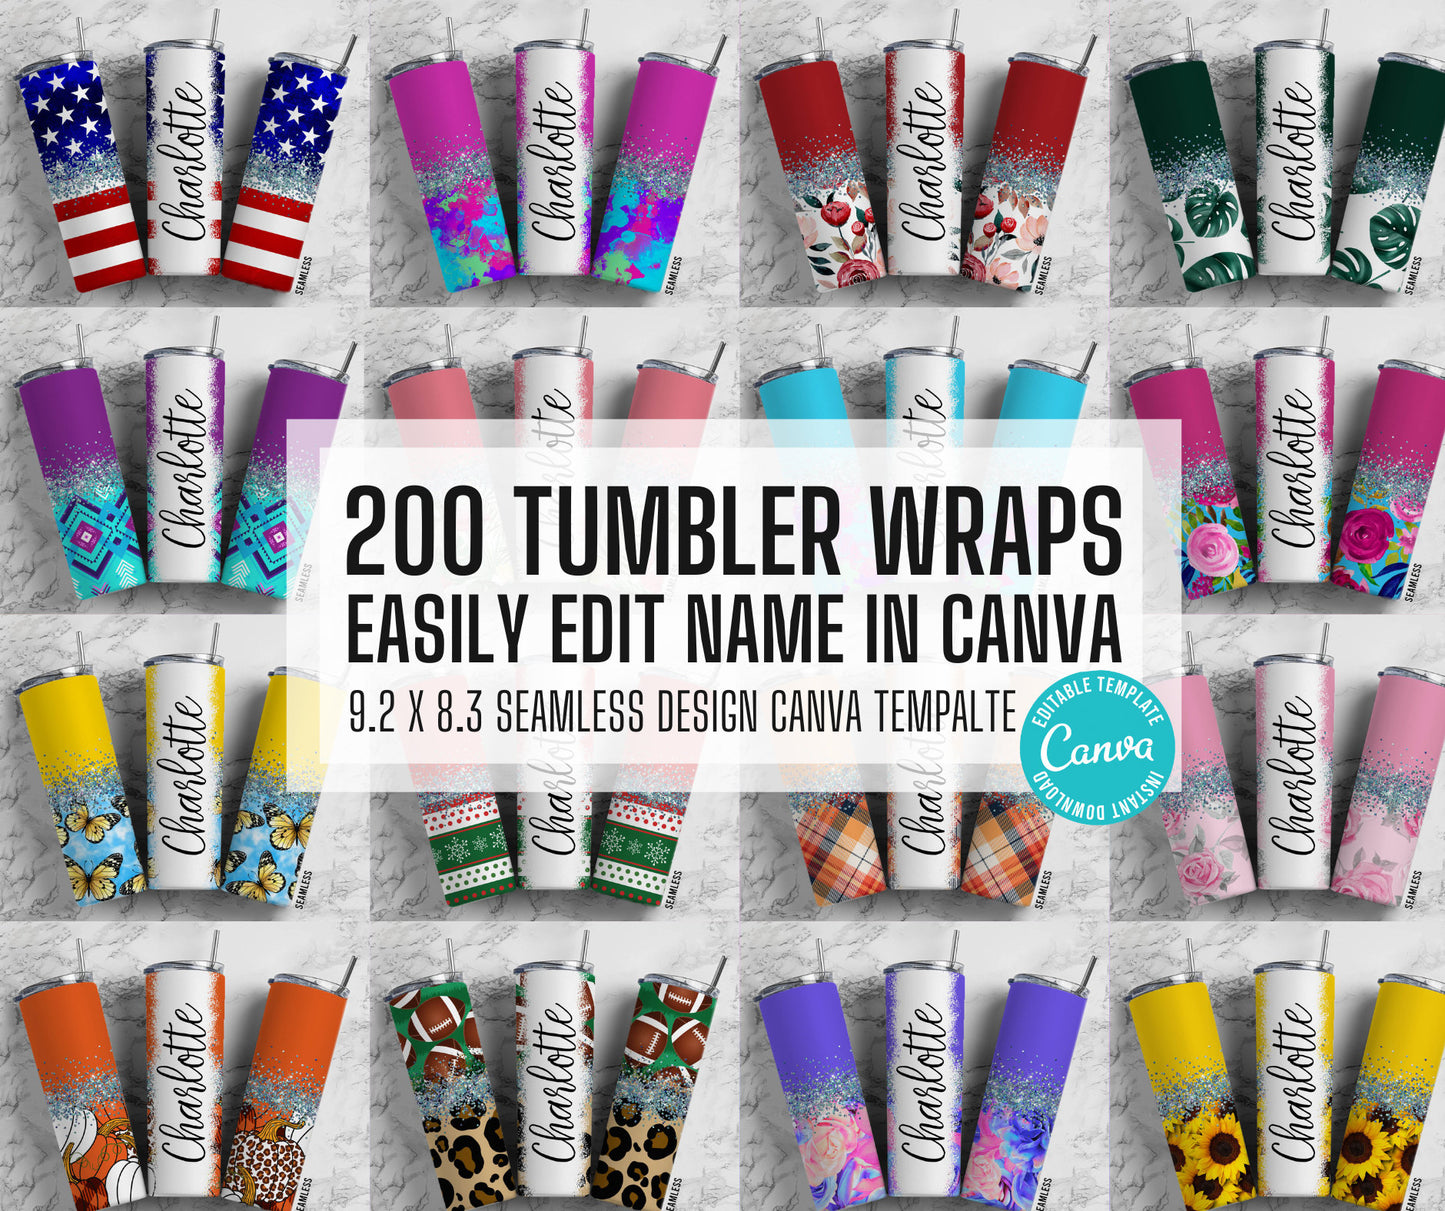 Glitter Mega Bundle 200 Editable Canva Tumbler Templates, Add Your Own Name, Canva Template, 9.2x8.3 Seamless Tumbler Wrap Designs